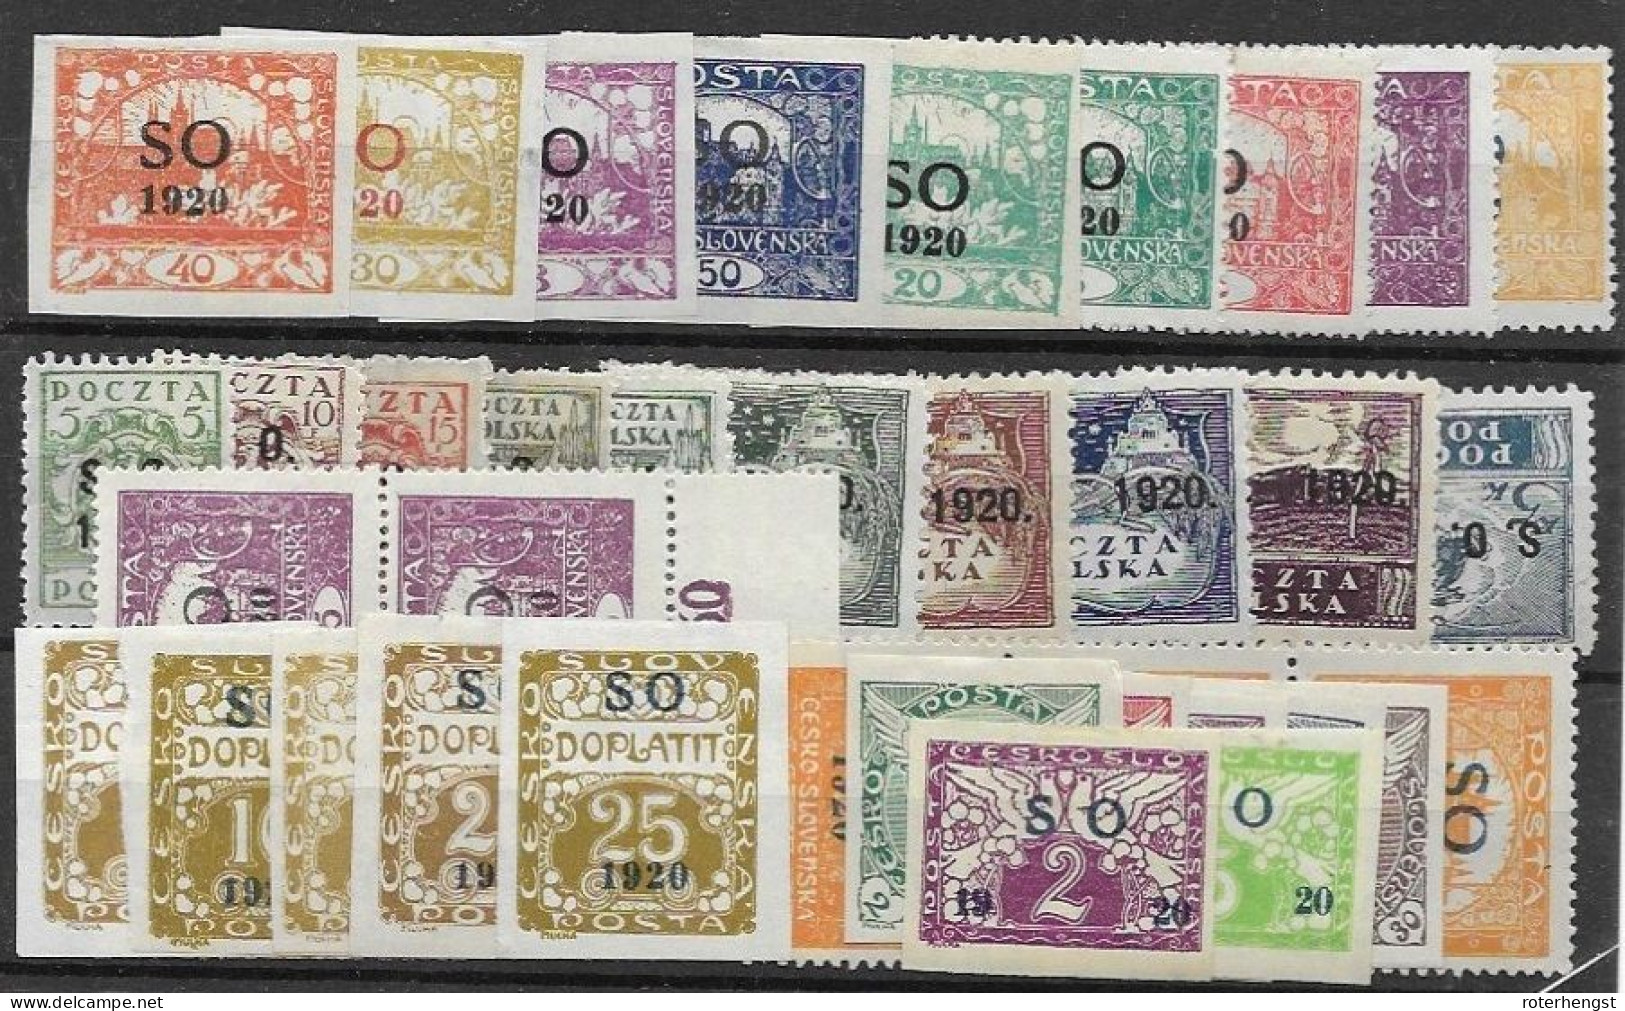 Silesia Schlesien Lot Mh * 10 Euros 1920 36 Stamps (5 Are Mnh **, 1 Has No Gum) - Silesia